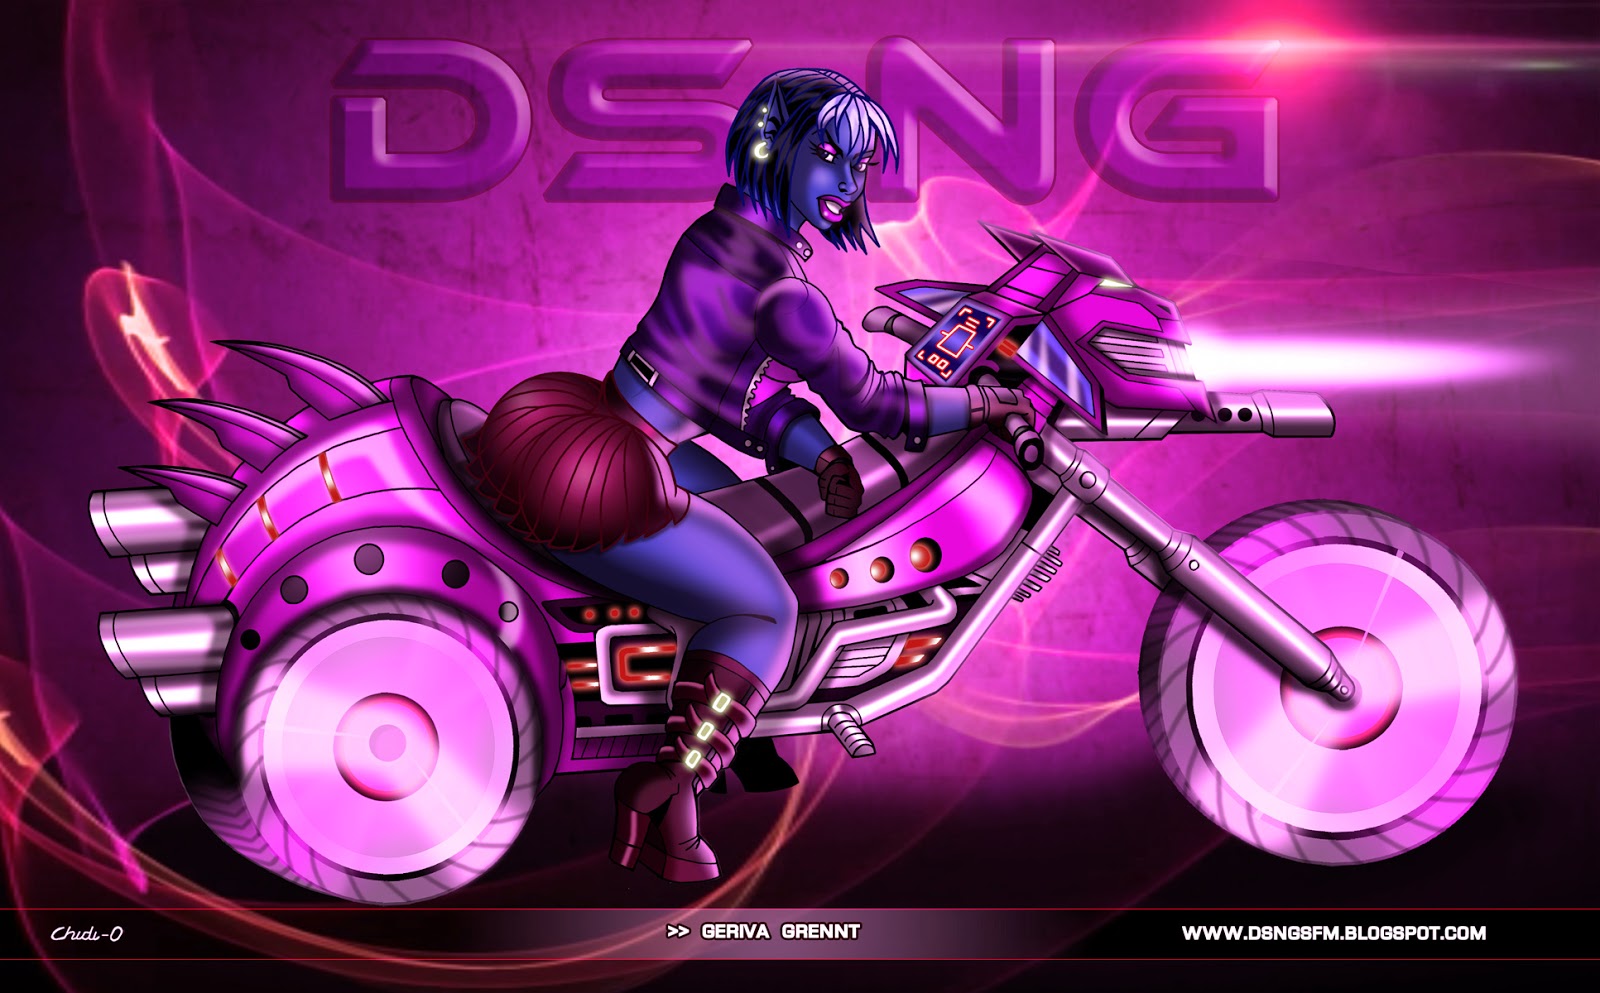 Dsngs Sci Fi Megaverse February 2014